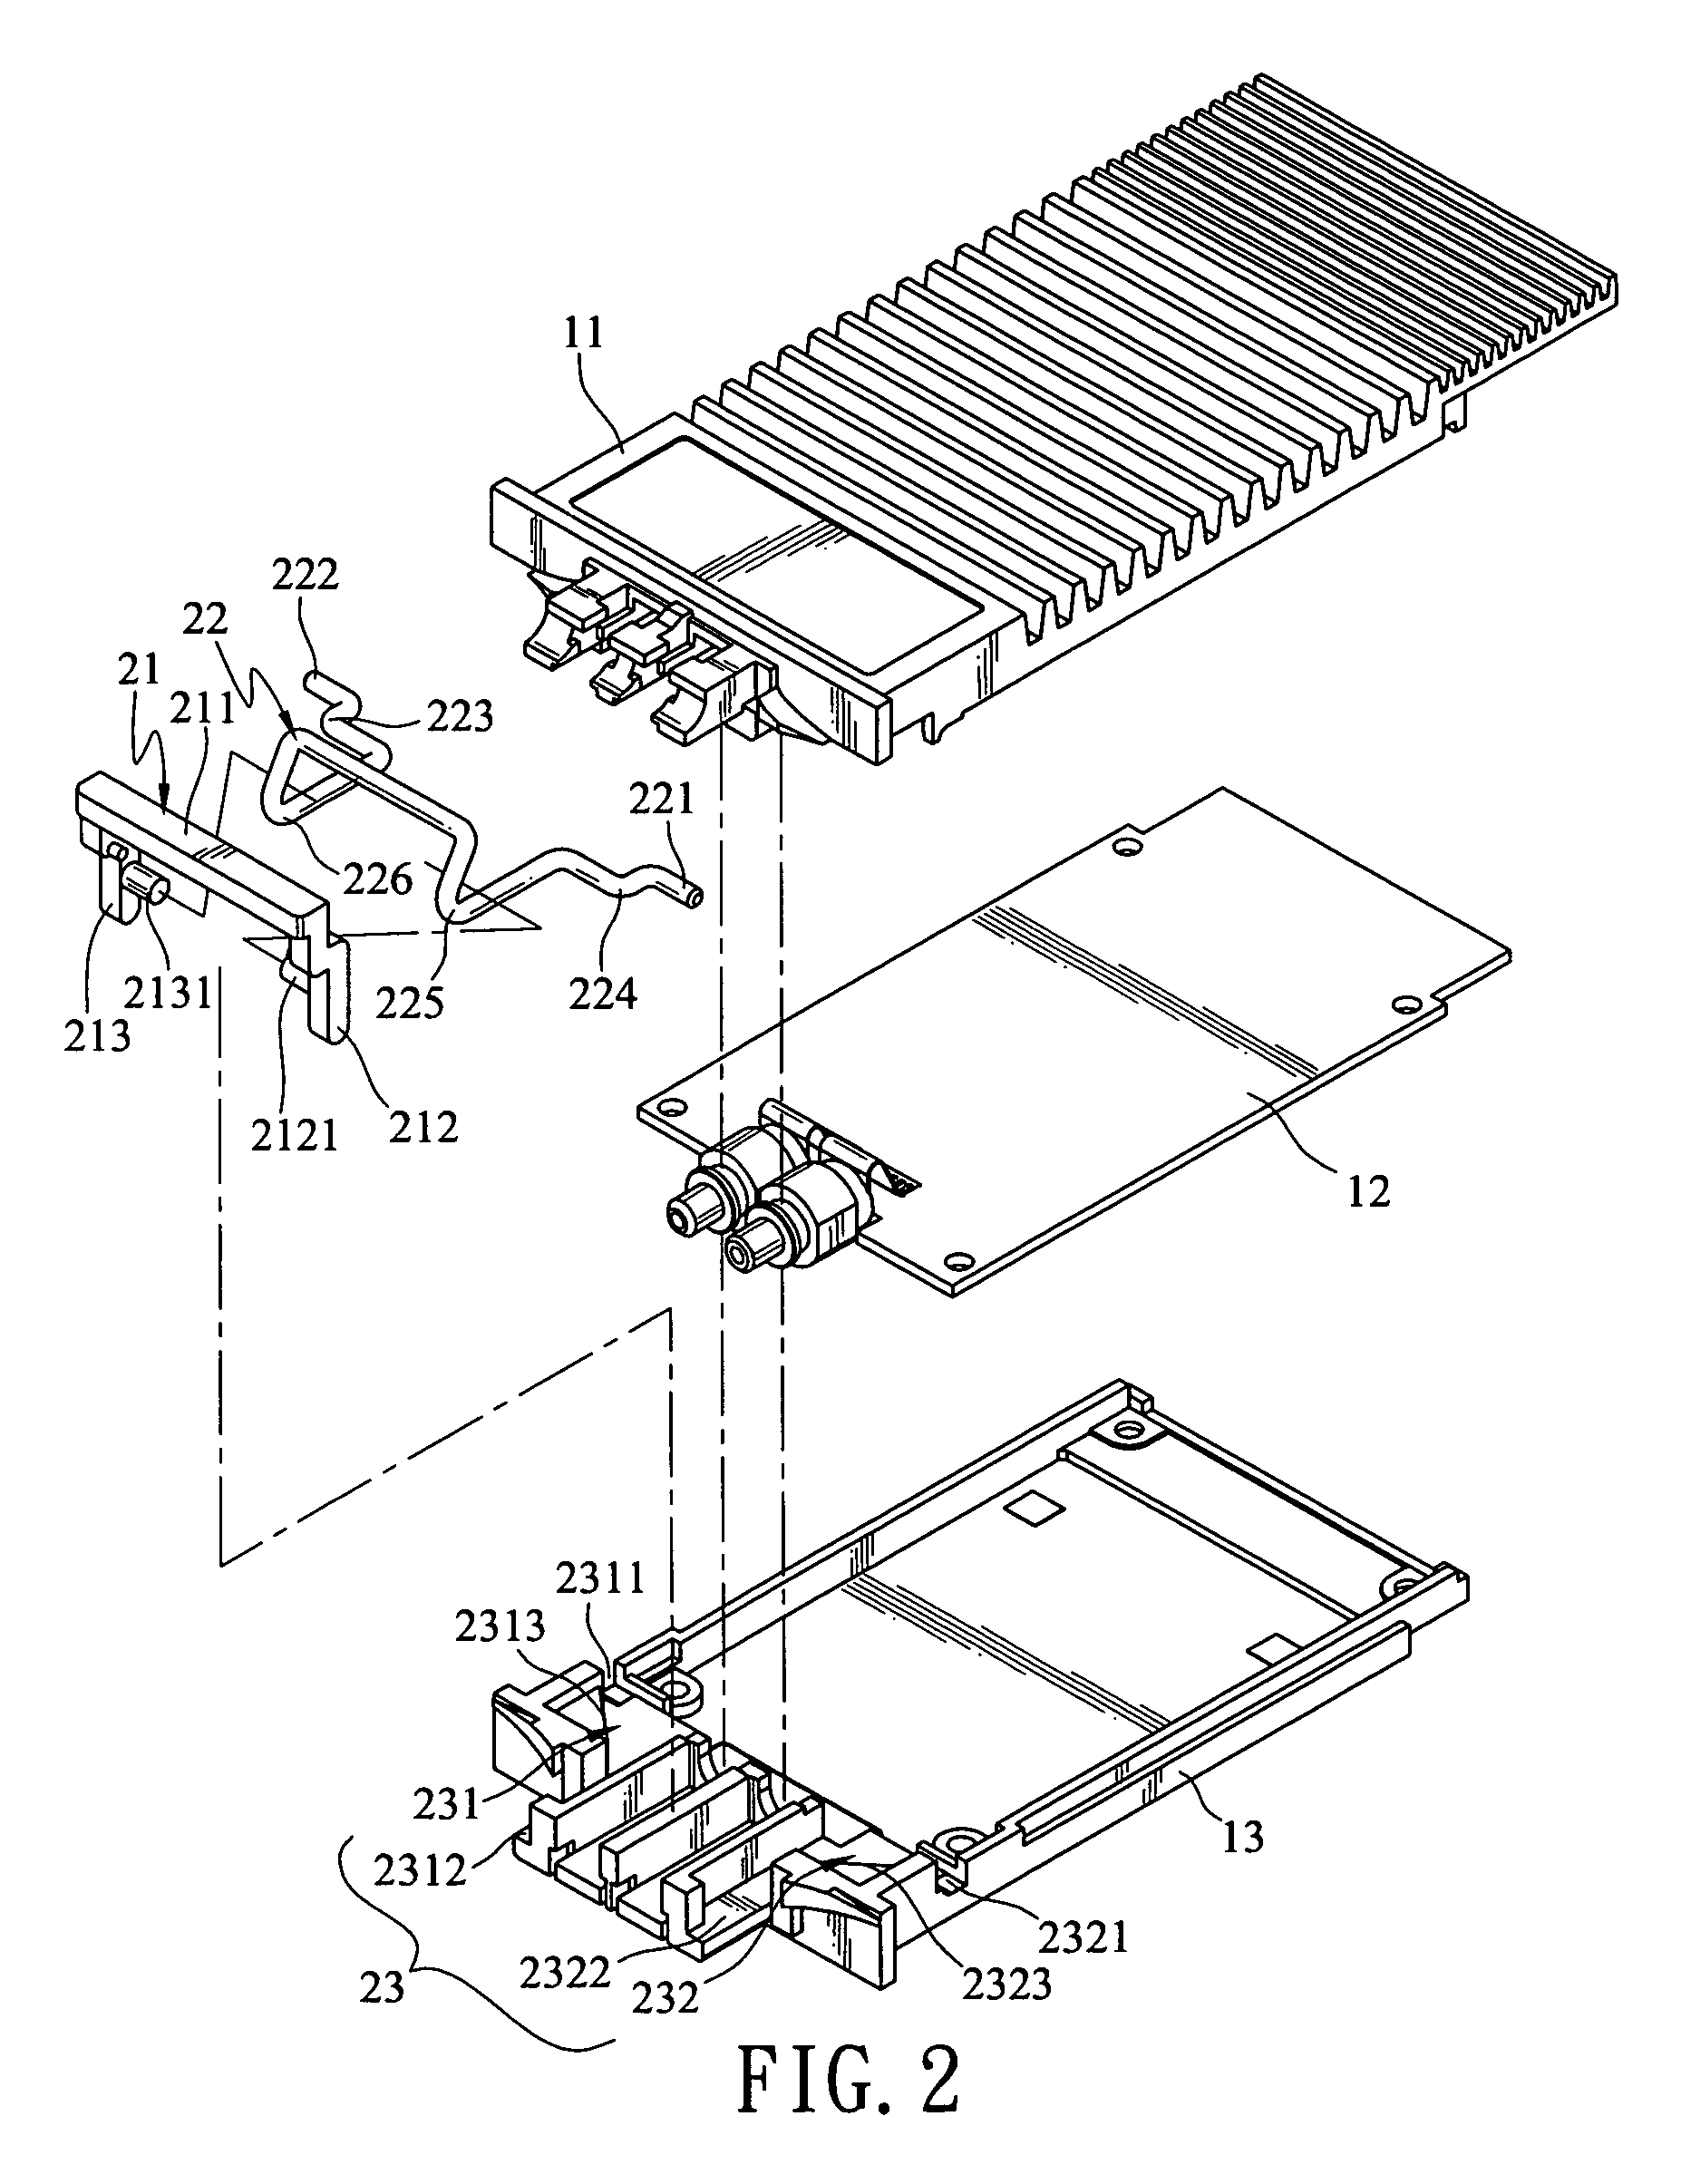 Extending latch mechanism for a pluggable optical module